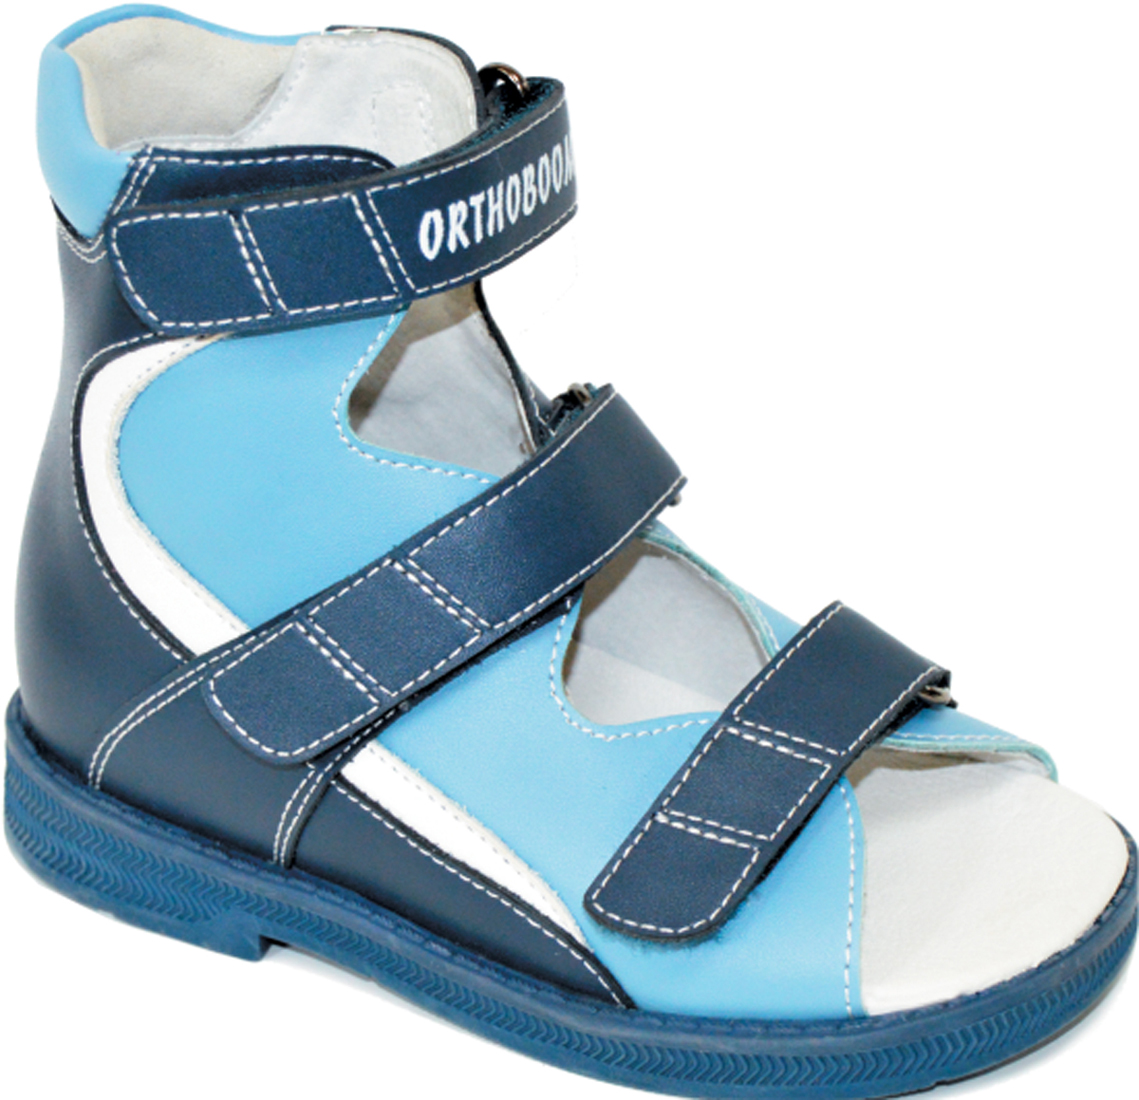 Сандалии для мальчика Orthoboom, цвет: темно-синий-голубой-белый. 71597-33. Размер 23